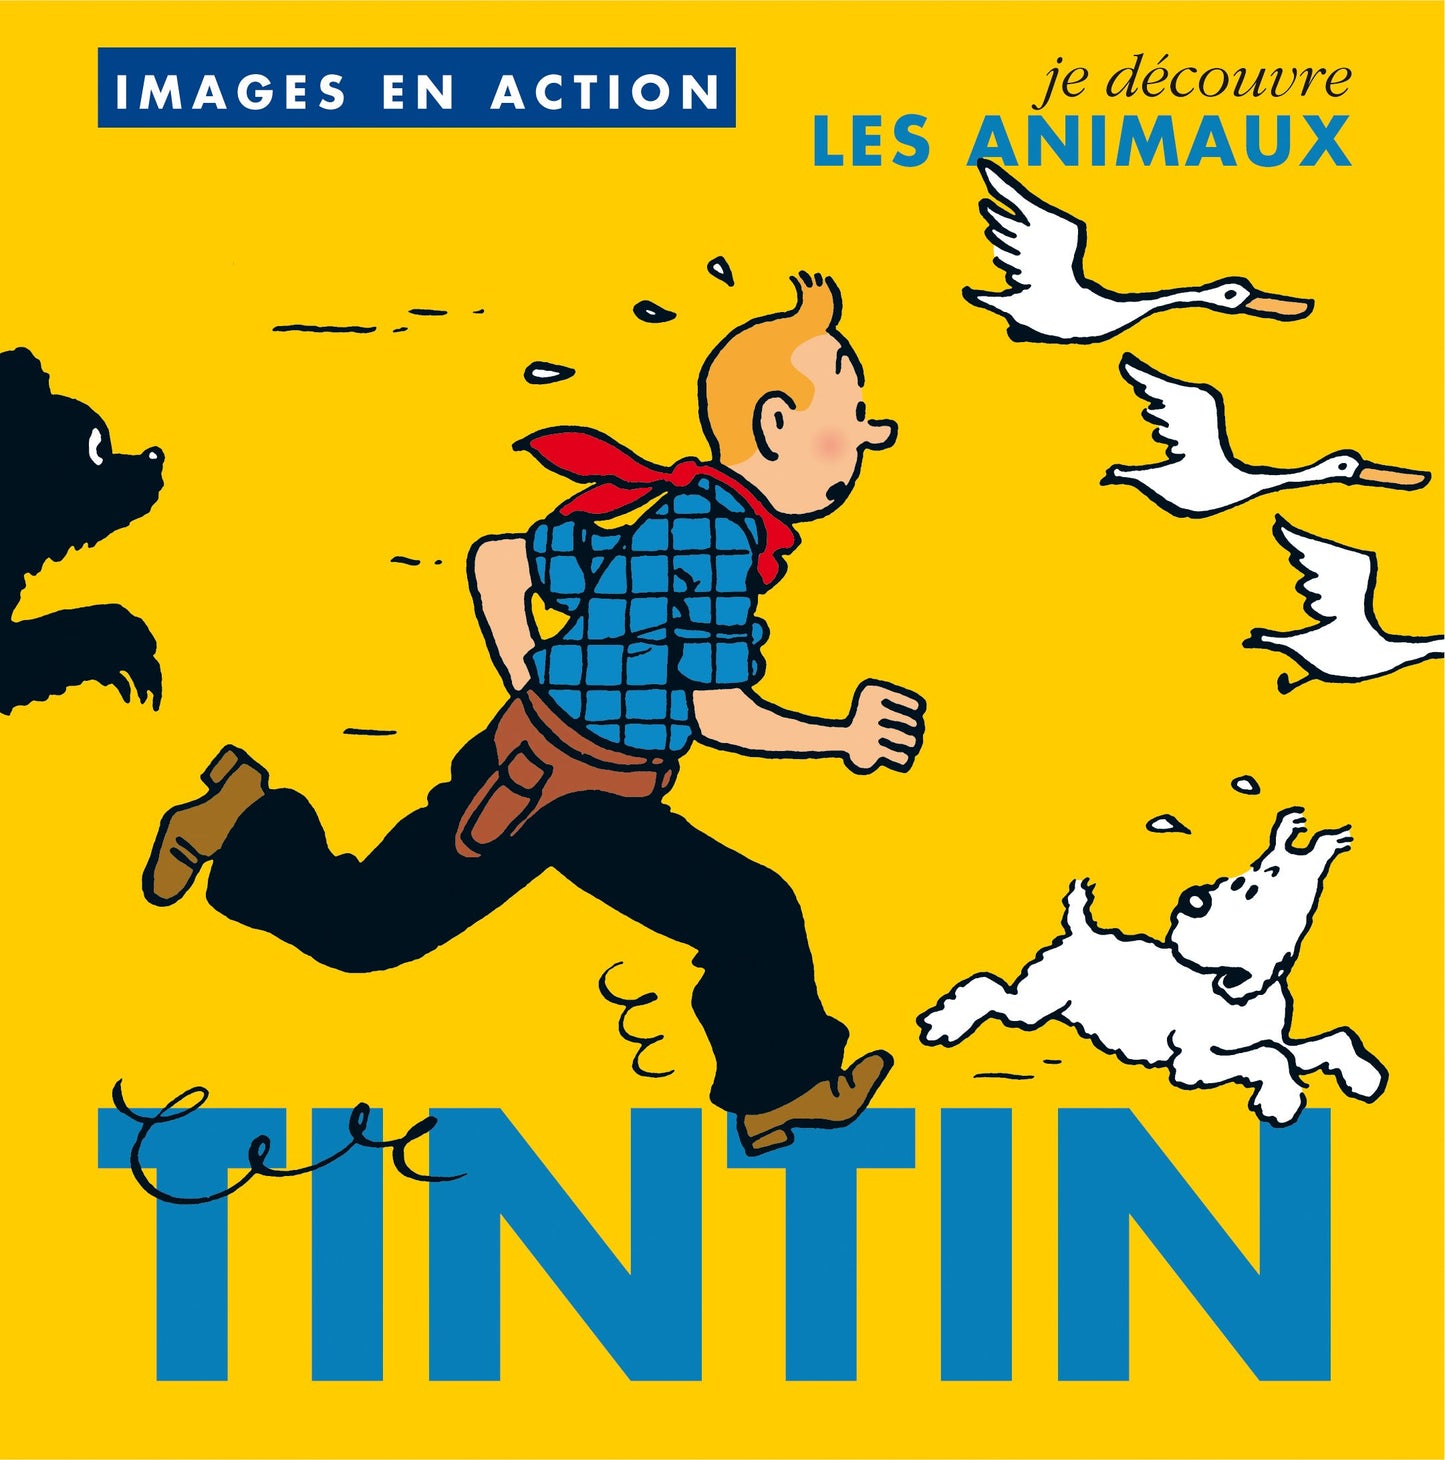 Images en action book - Animals